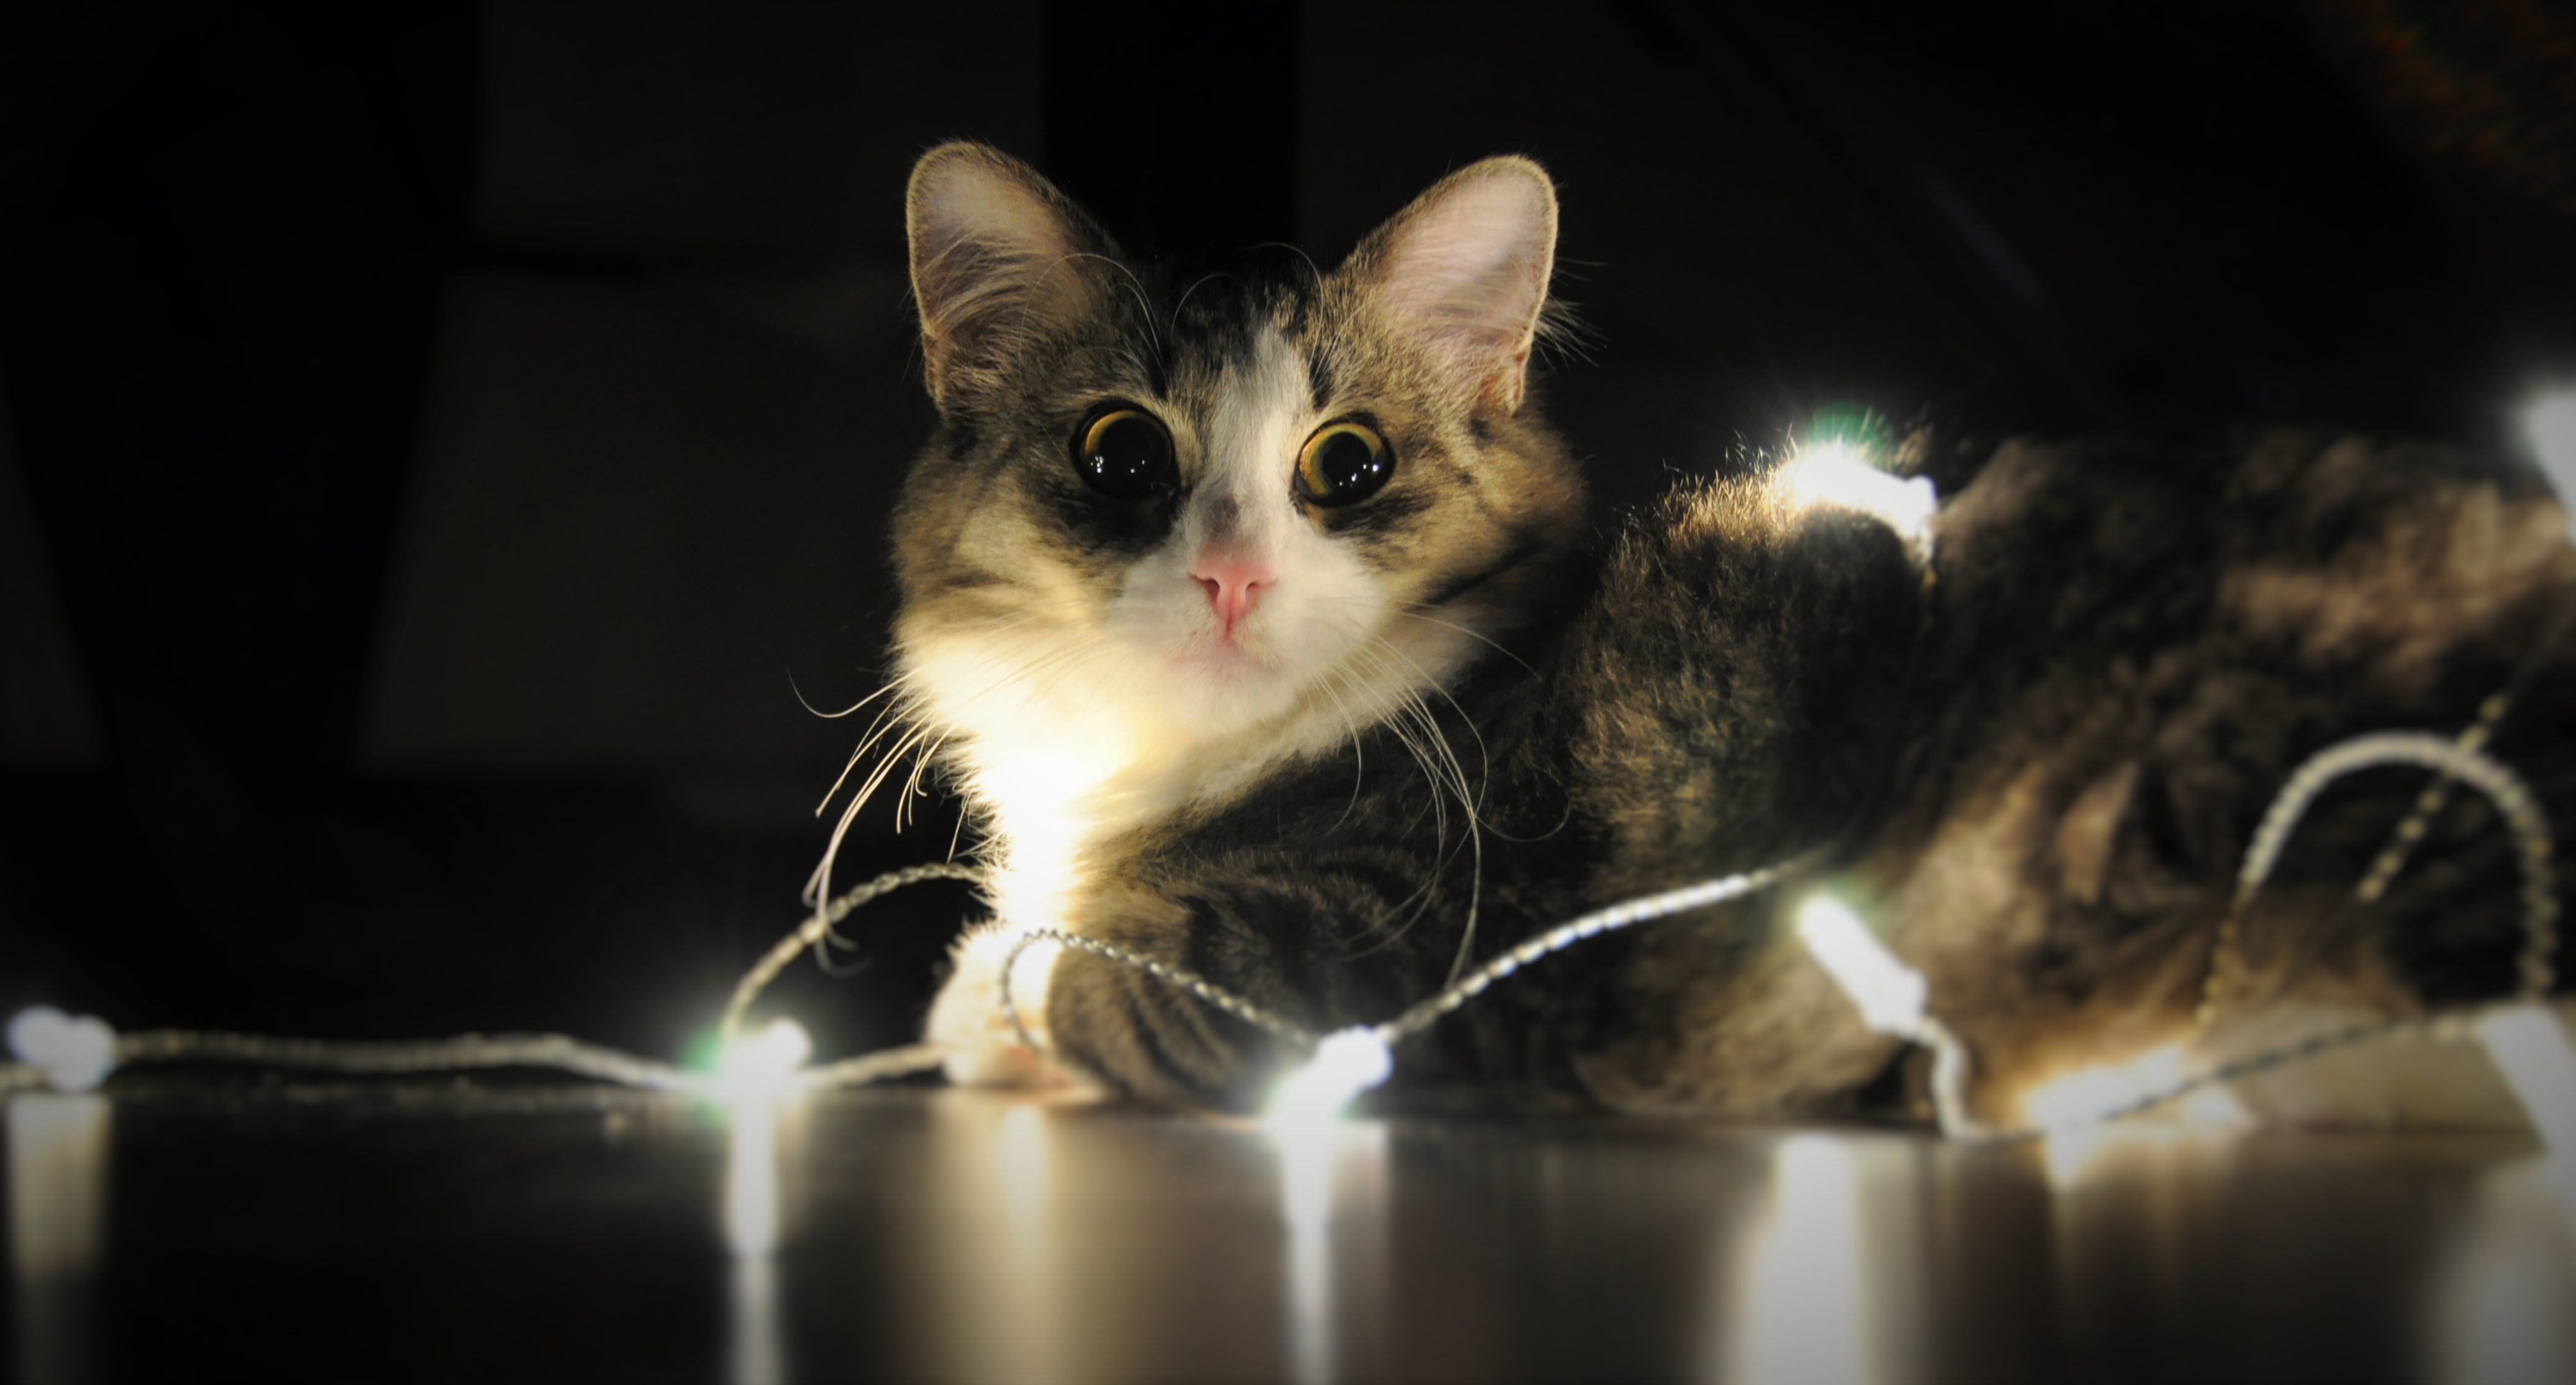 General 4150x2232 animals LEDs mammals cats indoors animal eyes